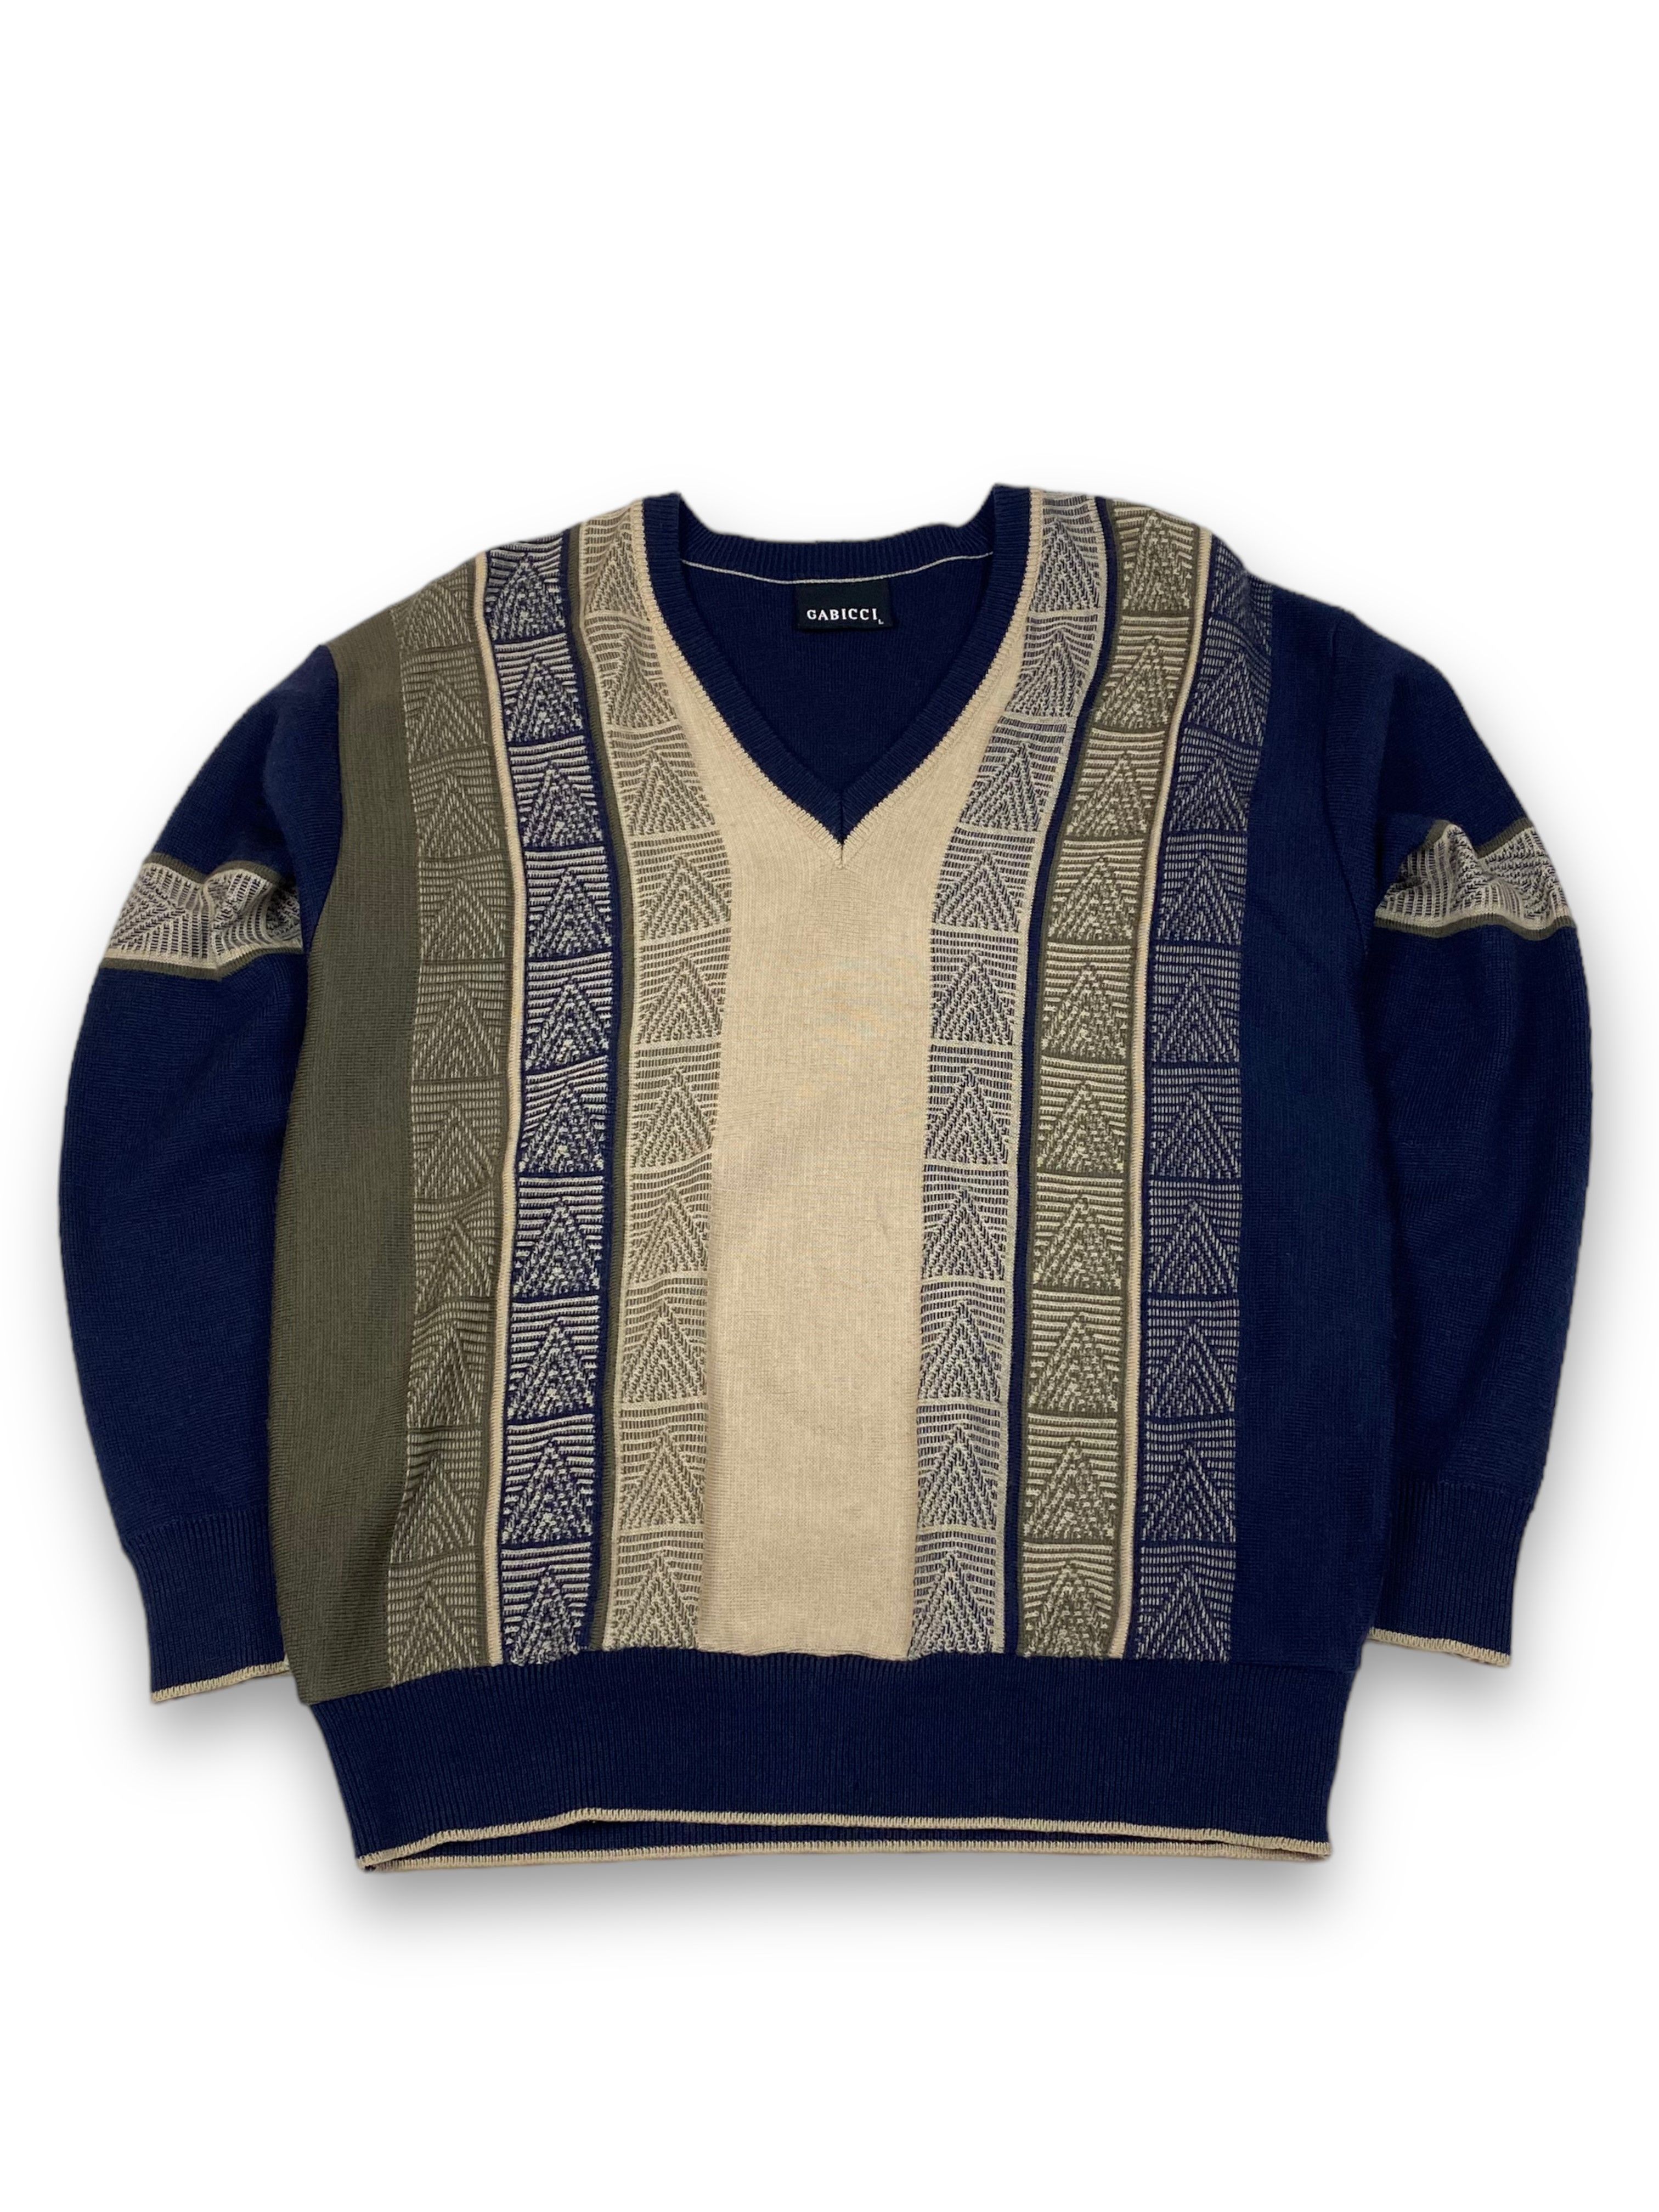 Pre-owned Cashmere Wool X Gabicci Vintage Gabicci Crazy Print V-neck Sweater Cardigan M664 In Navy/beige